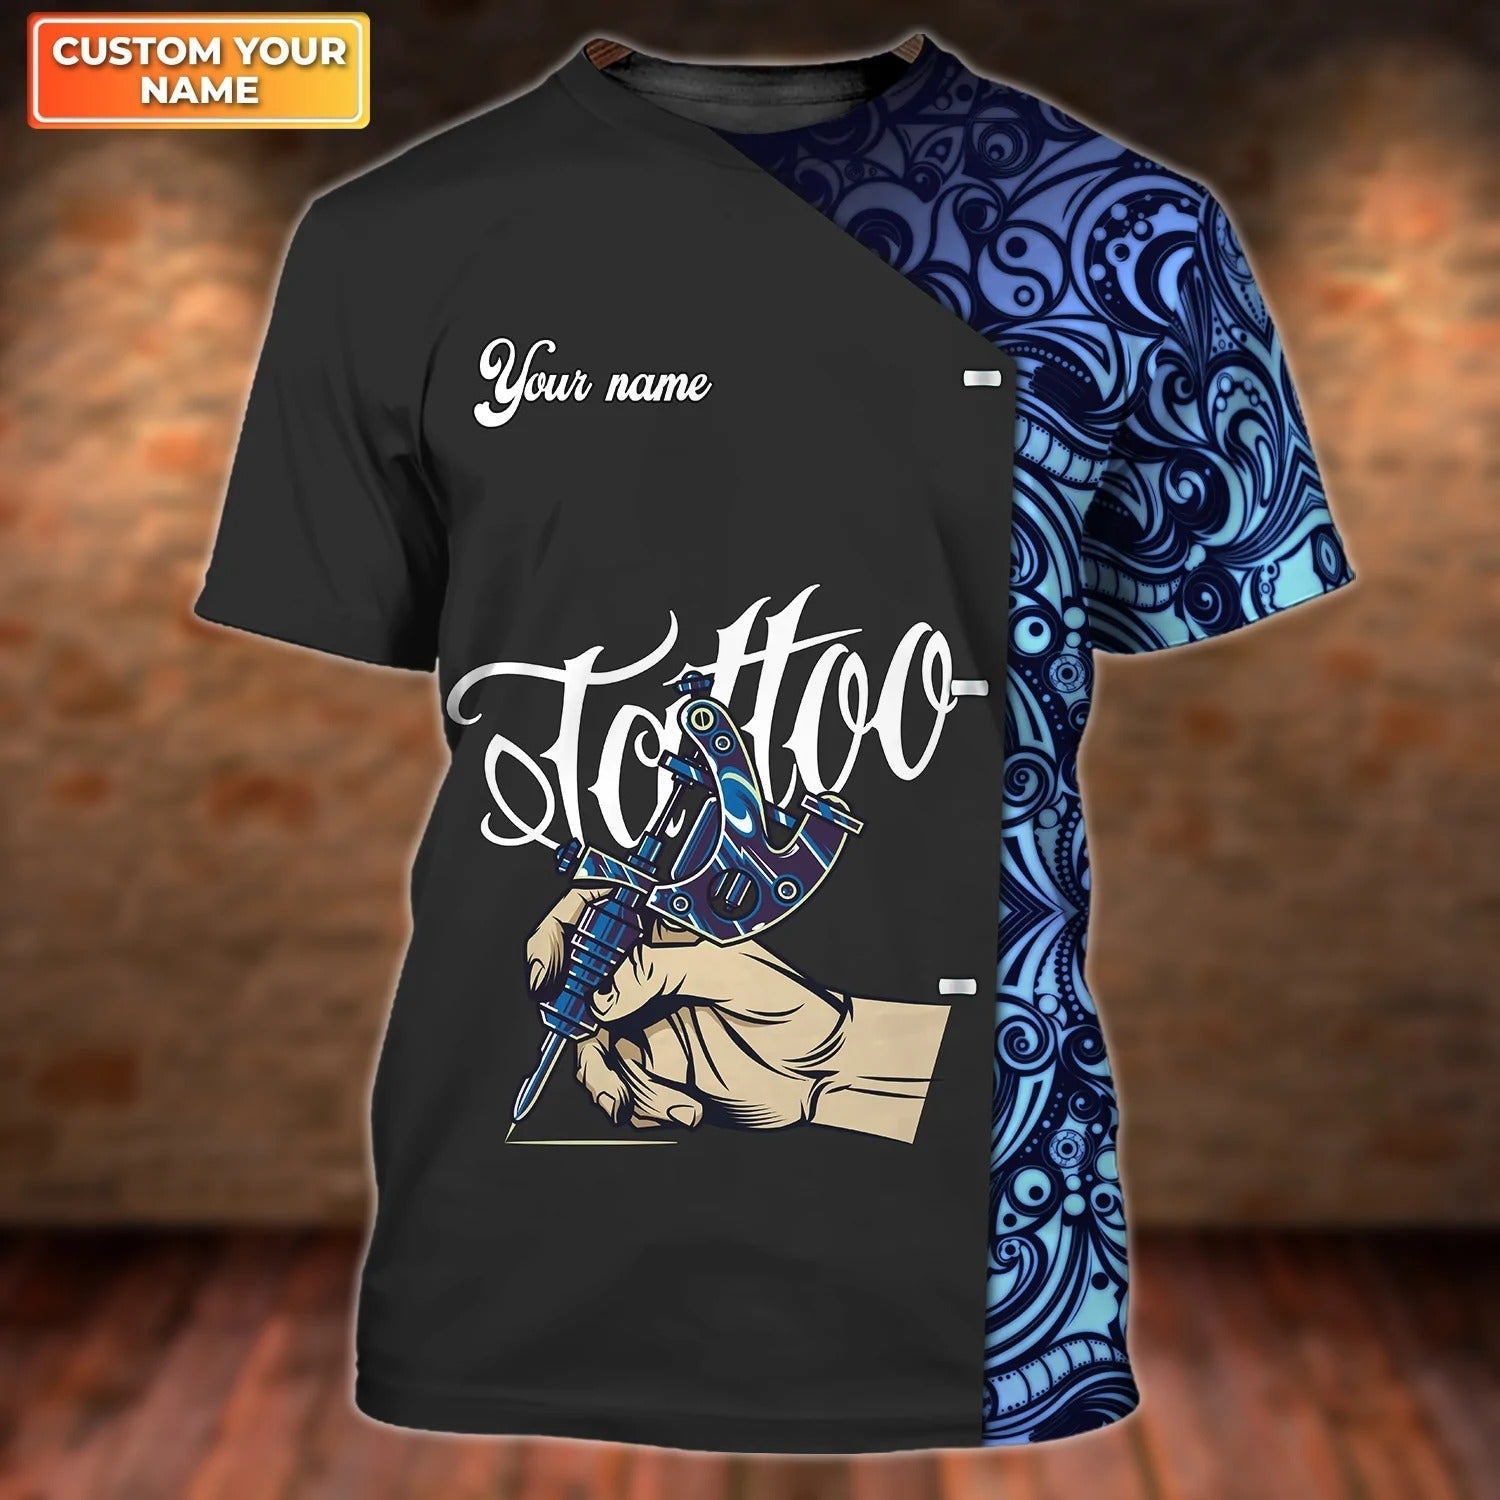 Custom 3D Tattoo Shirt Men/ Tattoo Shop Uniform/ Tattoo Lover Tshirt/ Gift For A Tattoo Artist